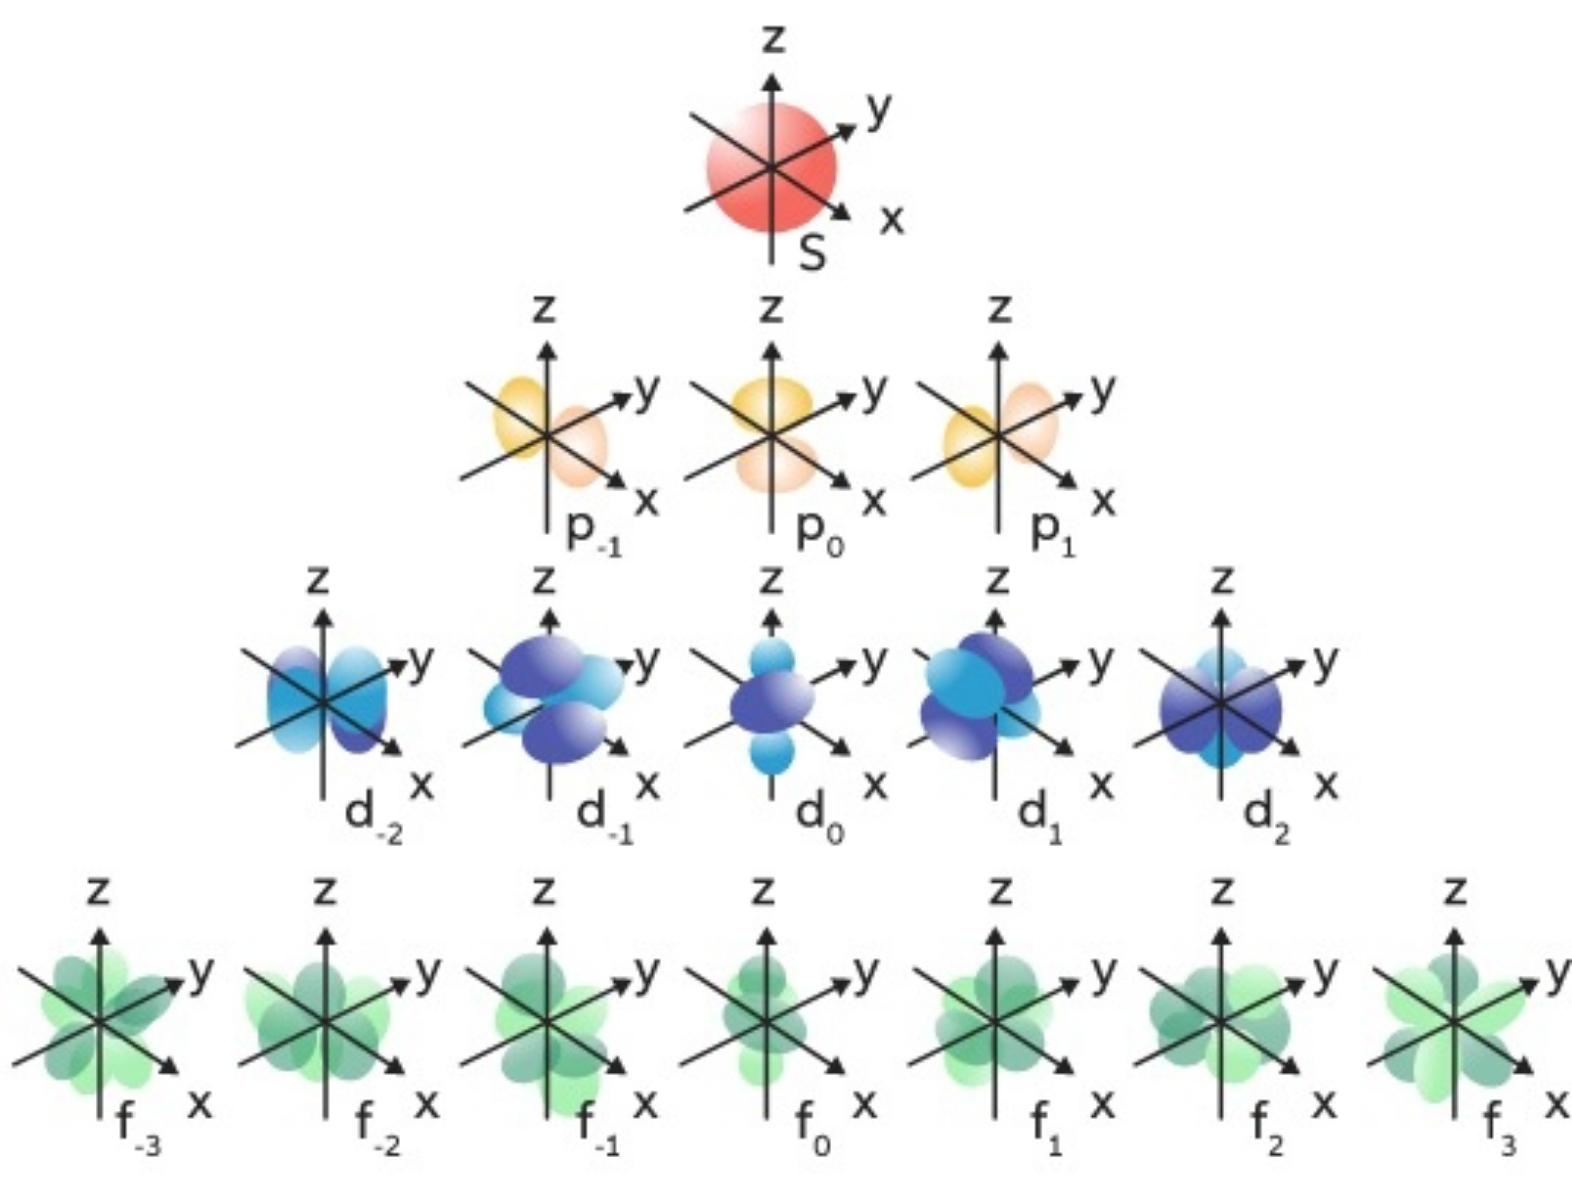 spin-quantum-numbers-ms-deepstash